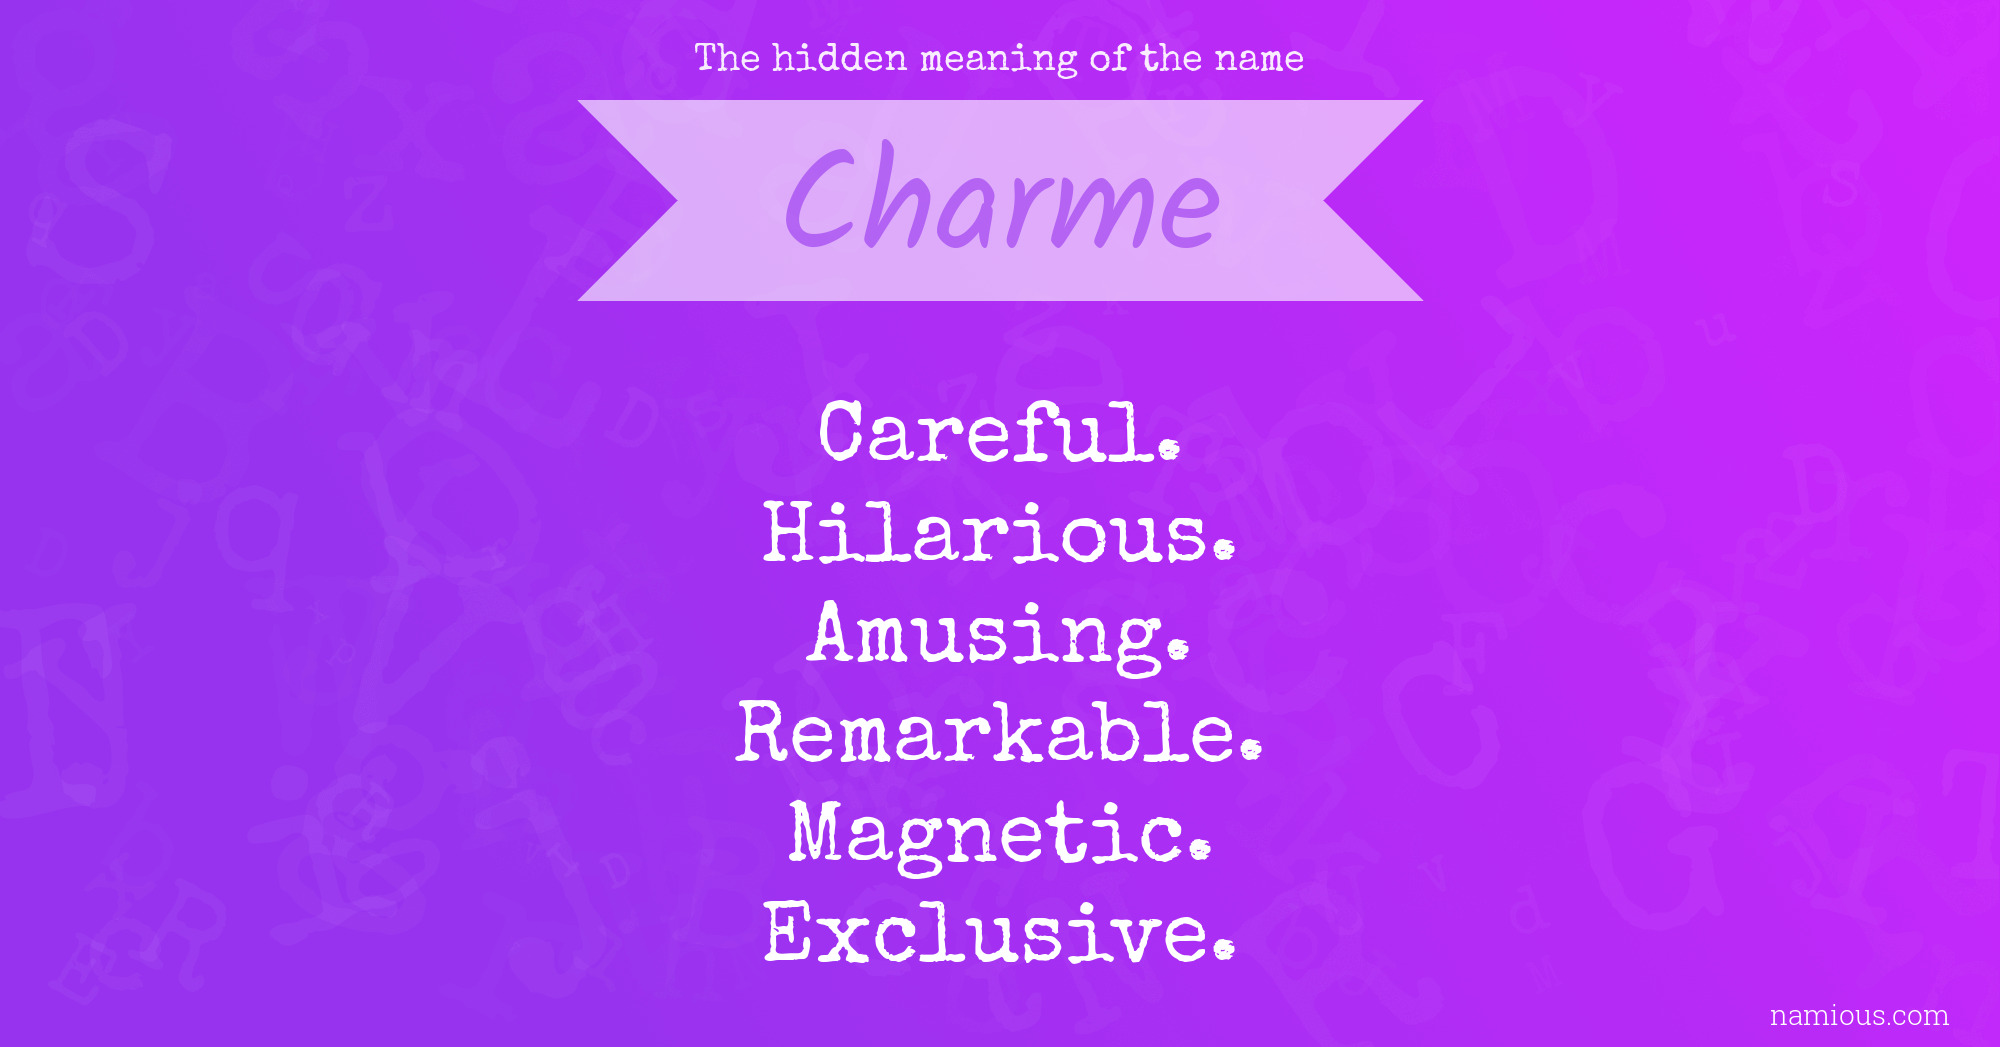 Charme definition